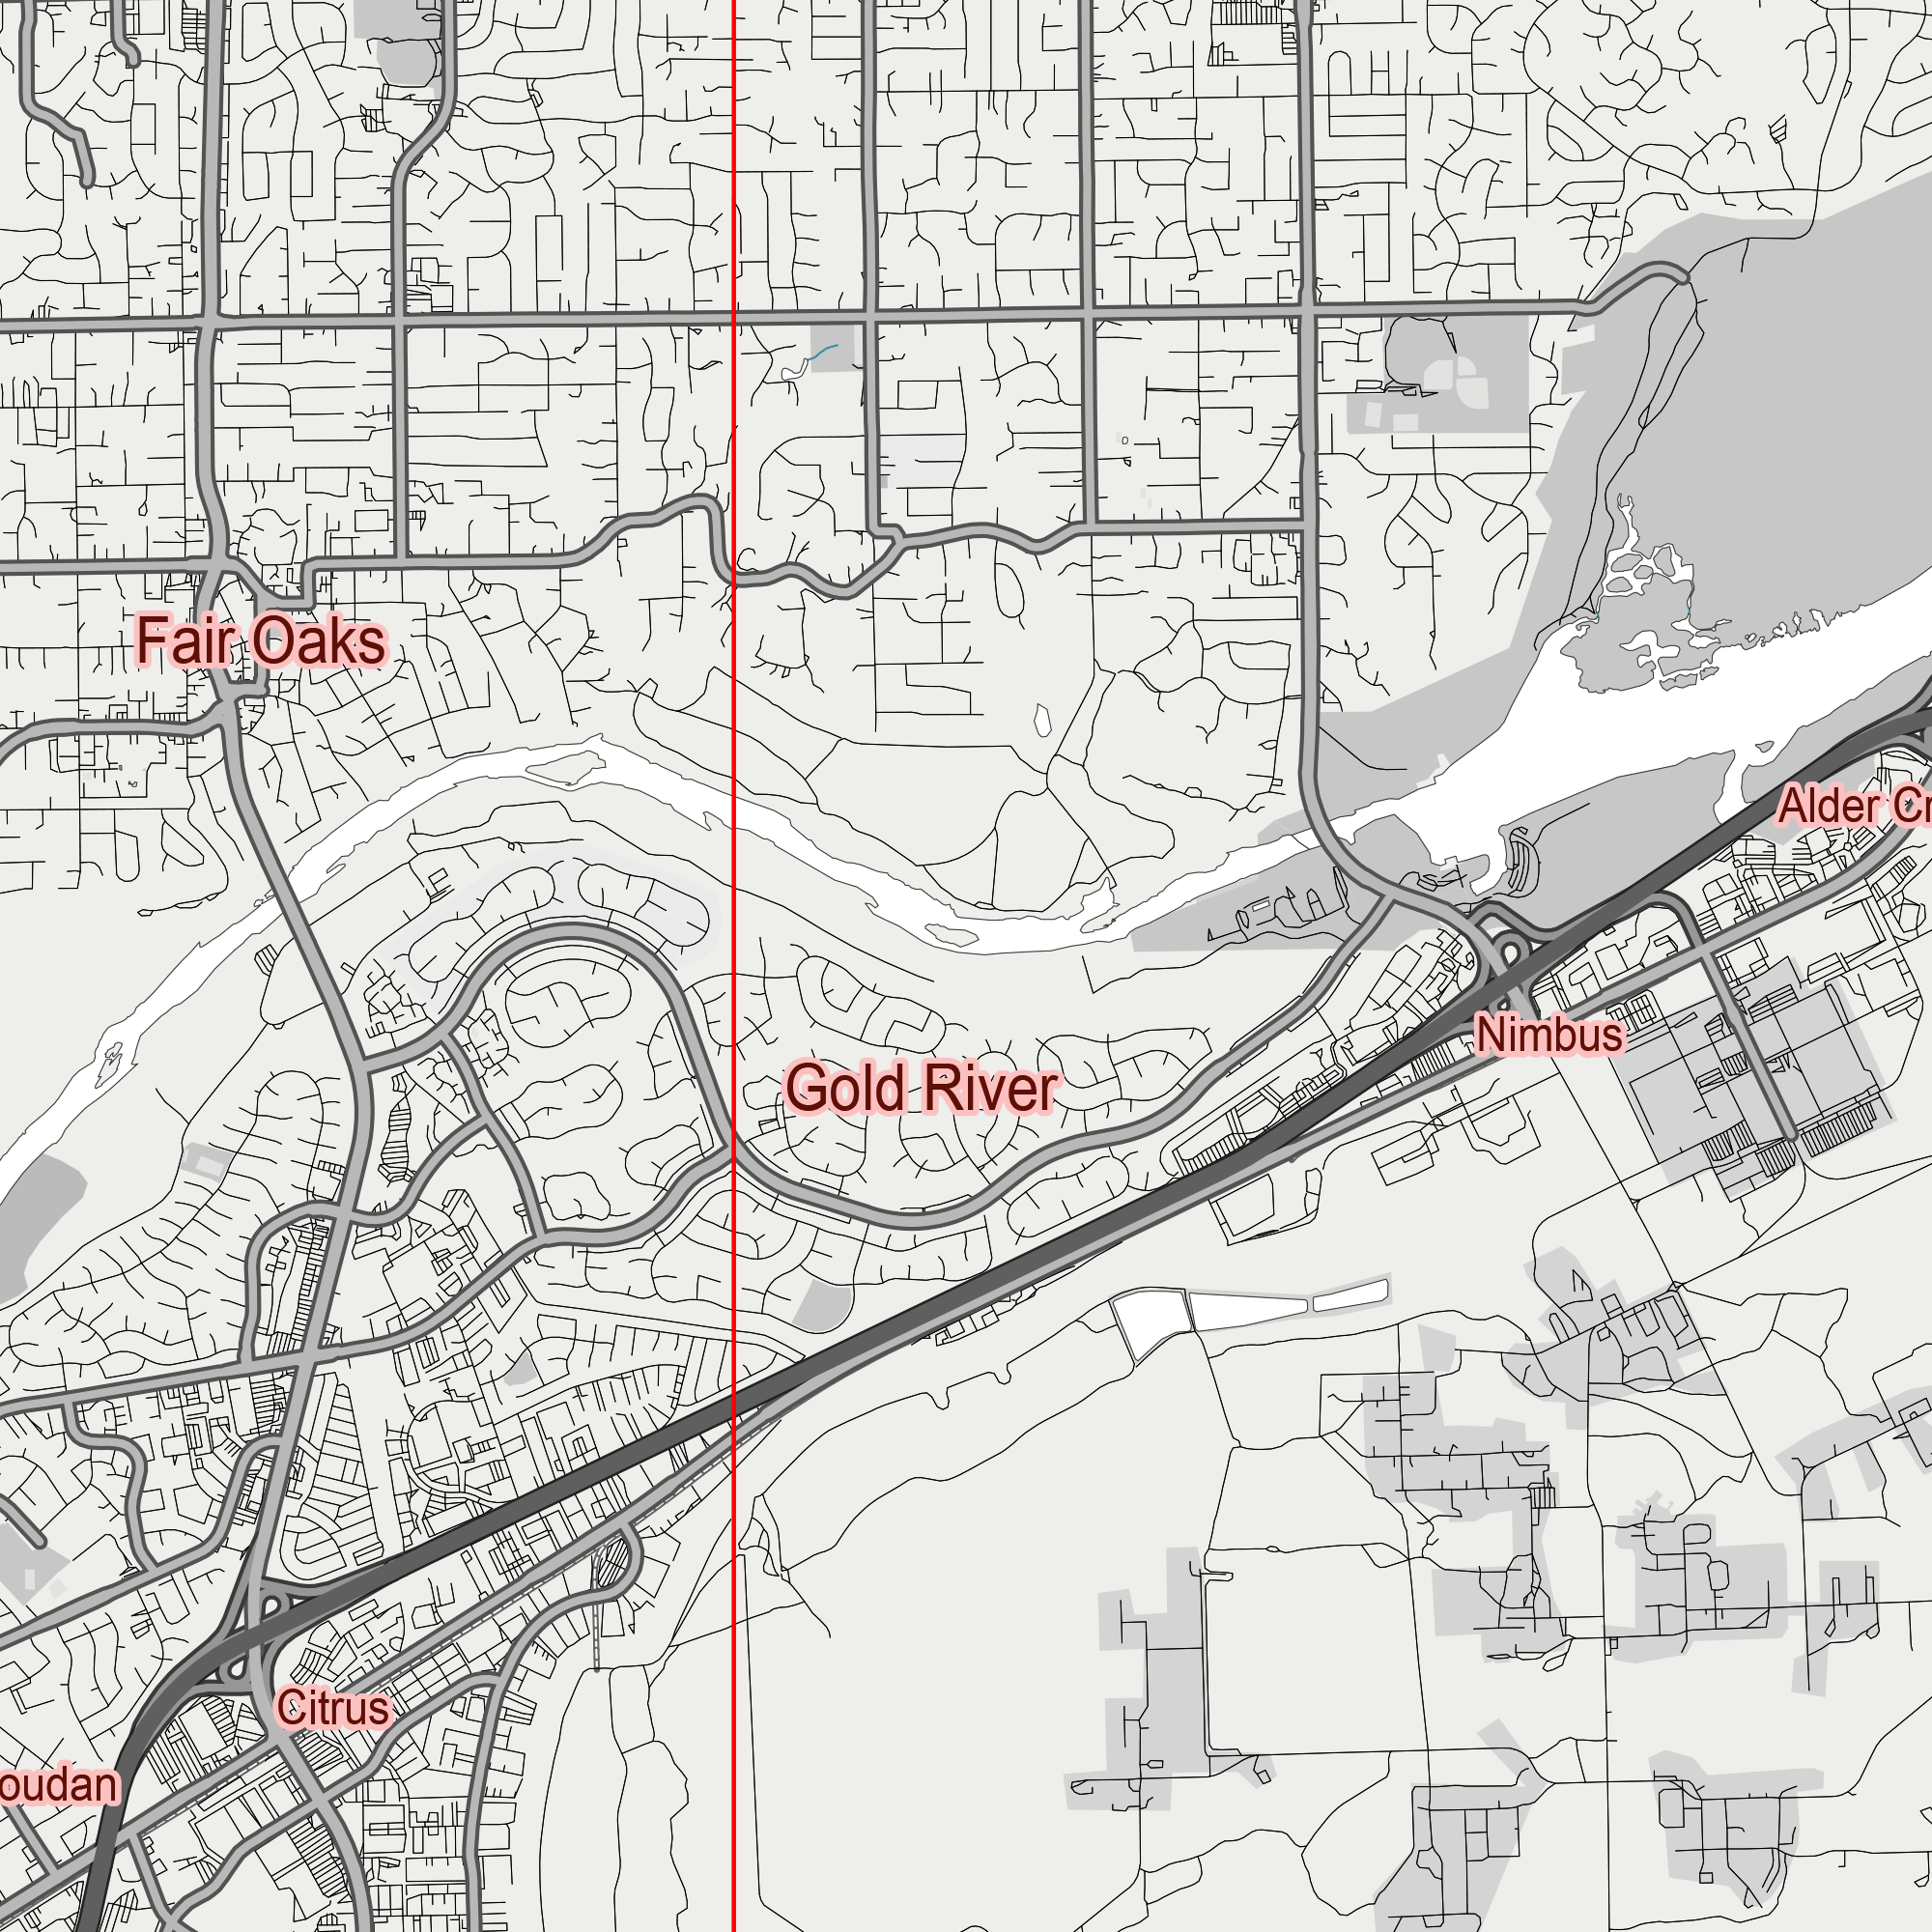 Sacramento California US PDF Vector Map: City Plan Low Detailed (simple white) Street Map editable Adobe PDF in layers